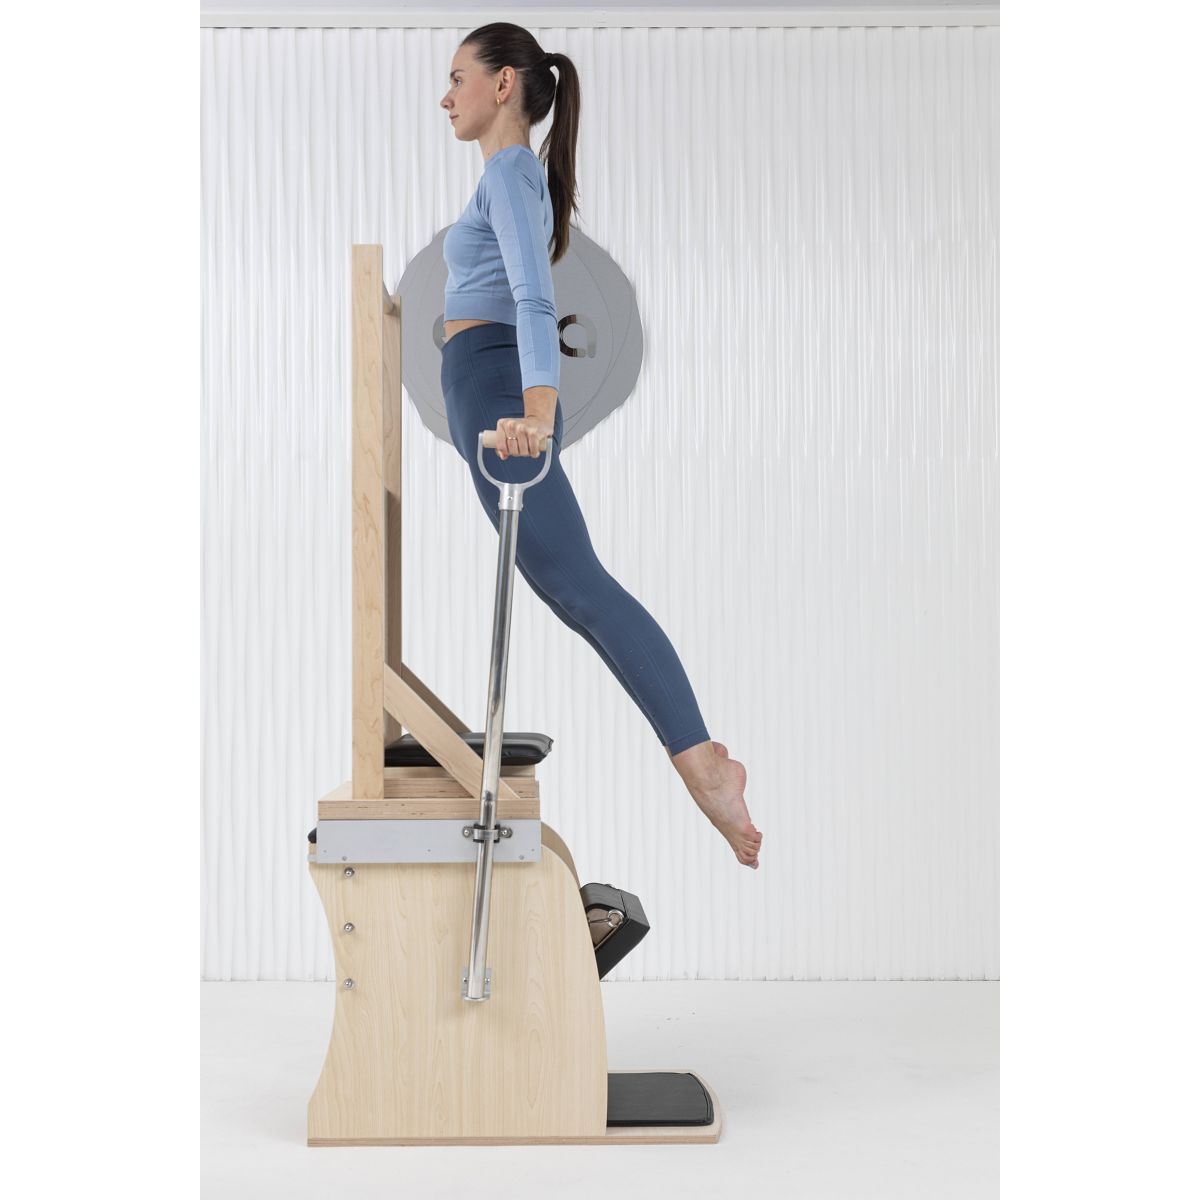 Combo Wunda Pilates Chair Woman Fitness Yoga Gym Stock Photo